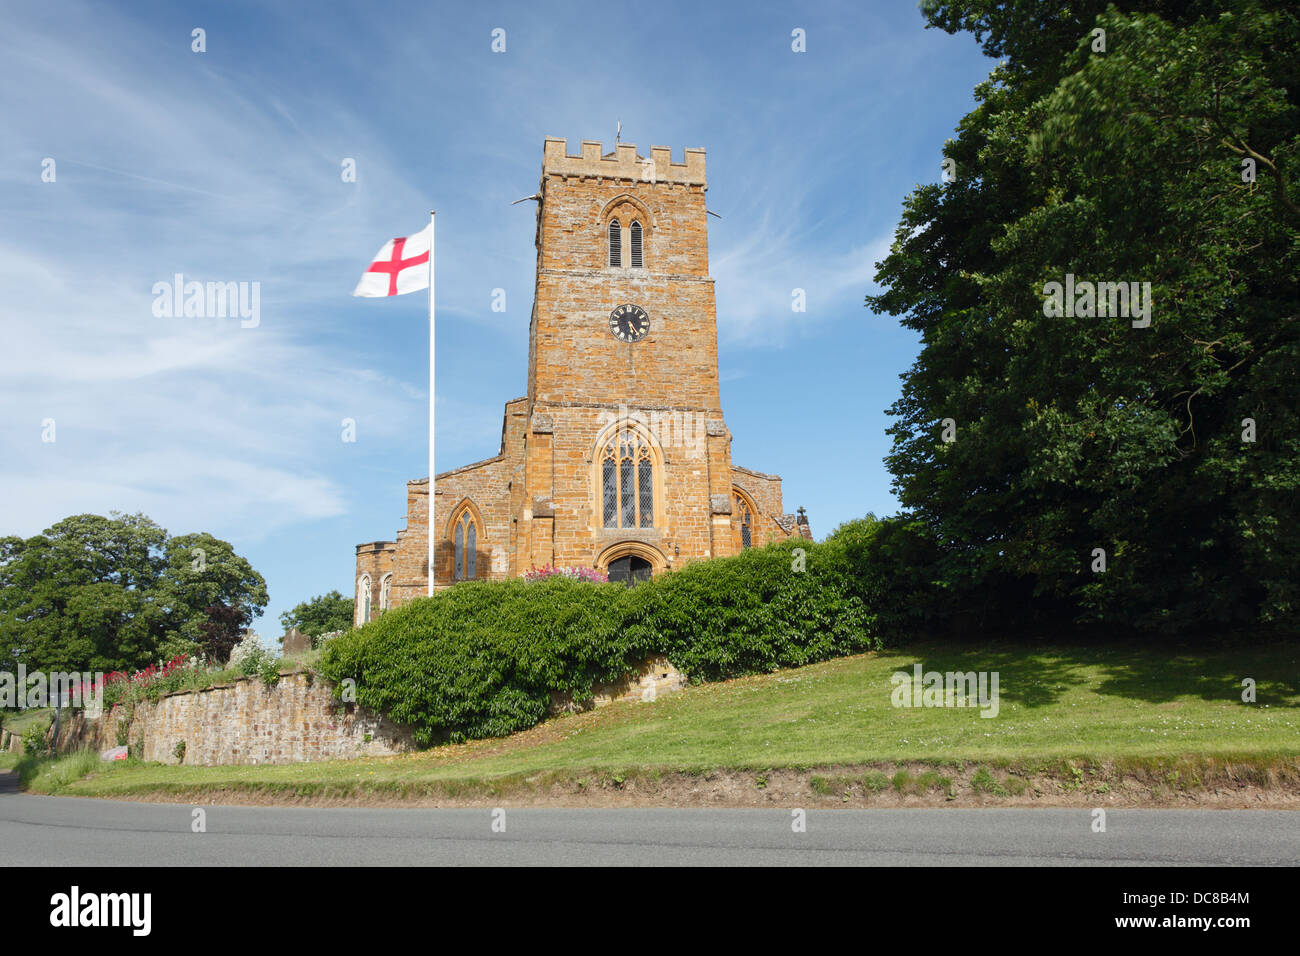 St Mary's Church, Great Brington. Northamptonshire, England, UK. Stock Photo